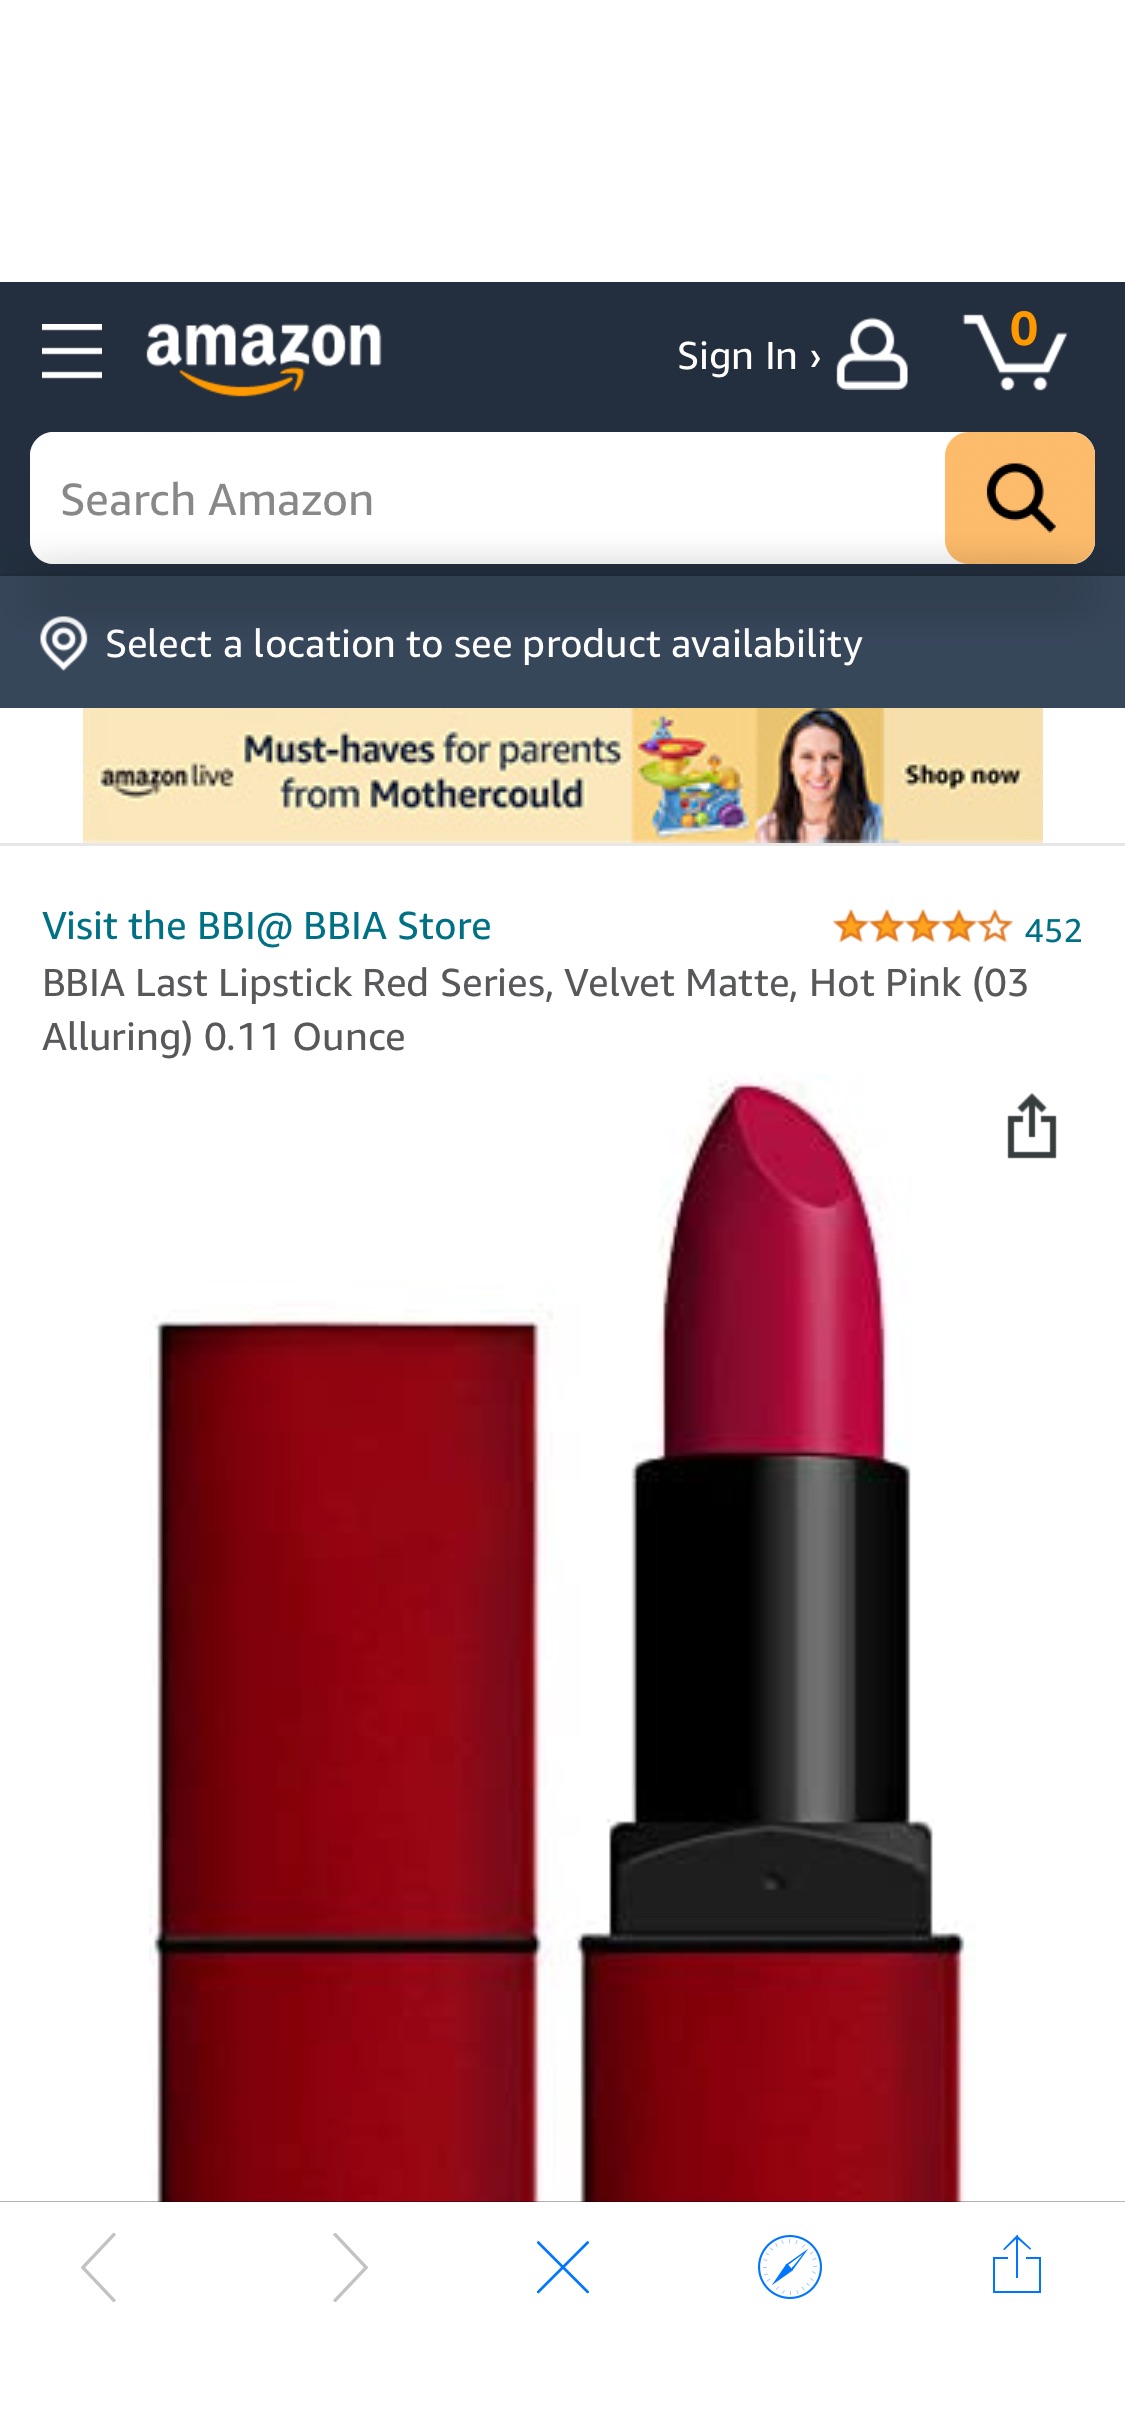 Amazon.com : BBIA Last Lipstick Red Series, Velvet Matte, Hot Pink (03 Alluring) 0.11 Ounce